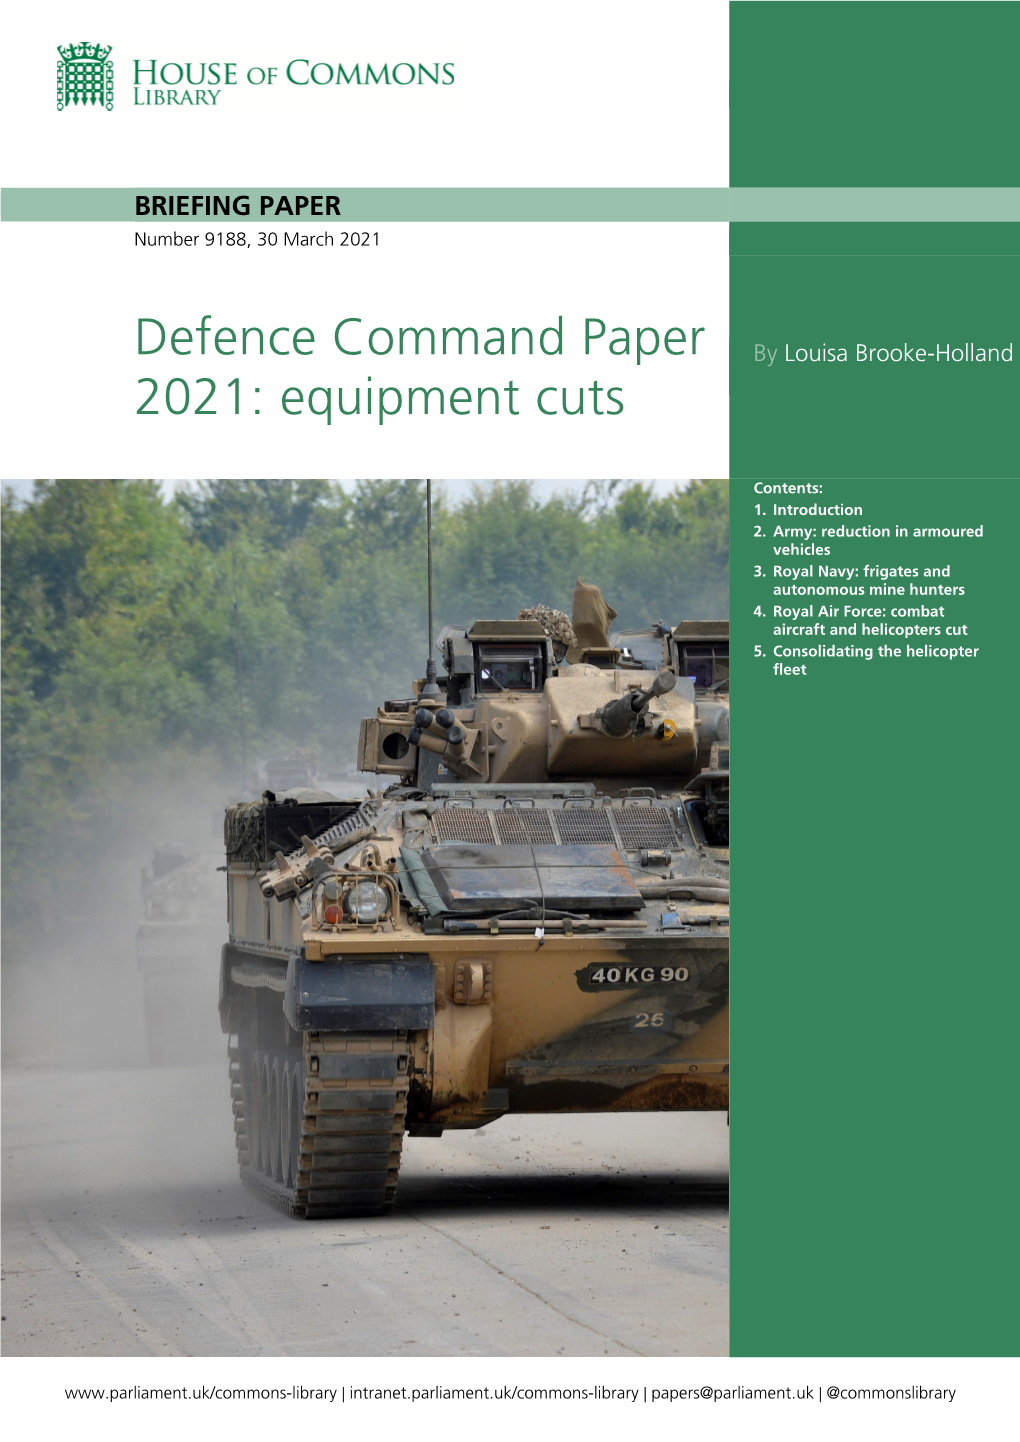 Defence Command Paper 2021: Equipment Cuts